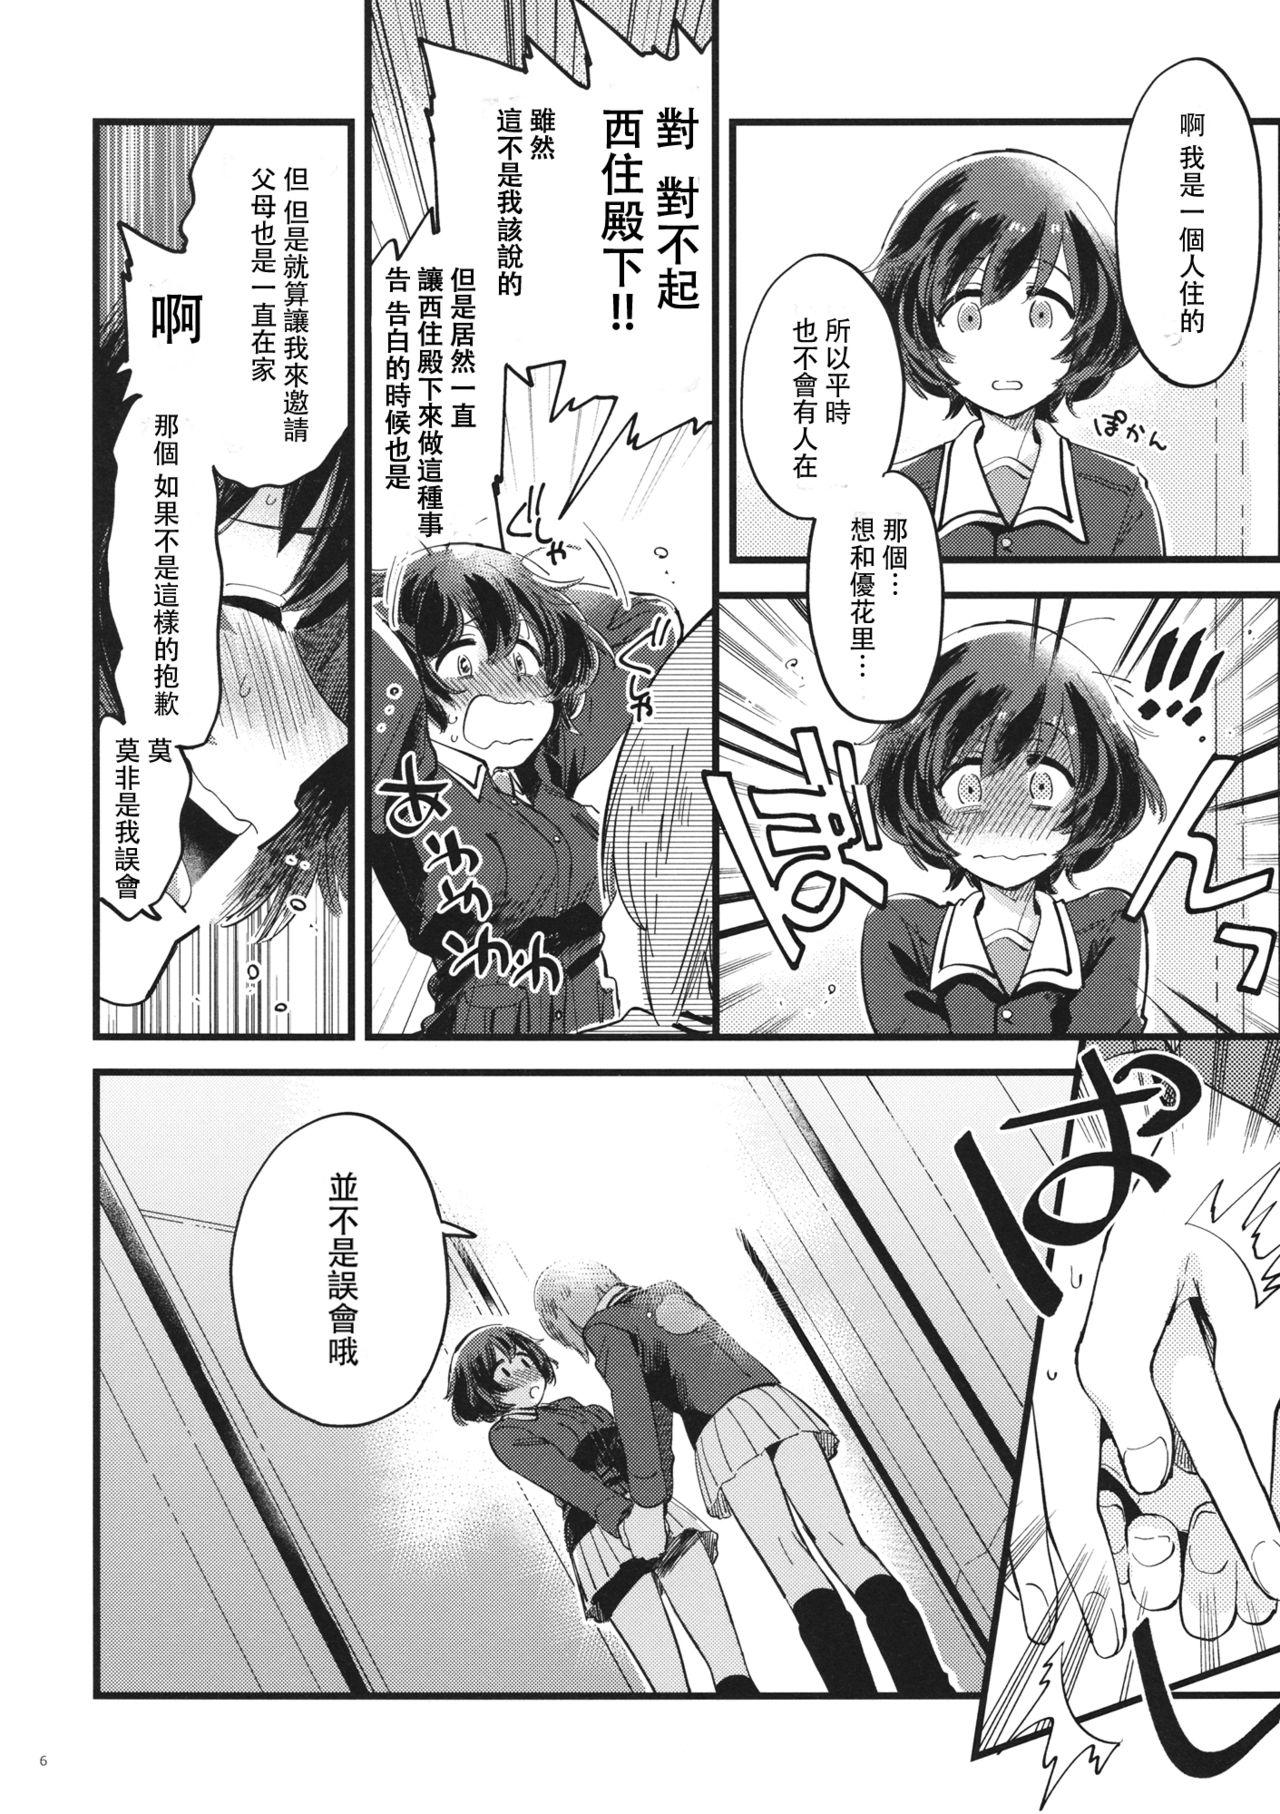 Virtual Yasashiku, Sawatte, Oku made Furete. - Girls und panzer Long Hair - Page 6